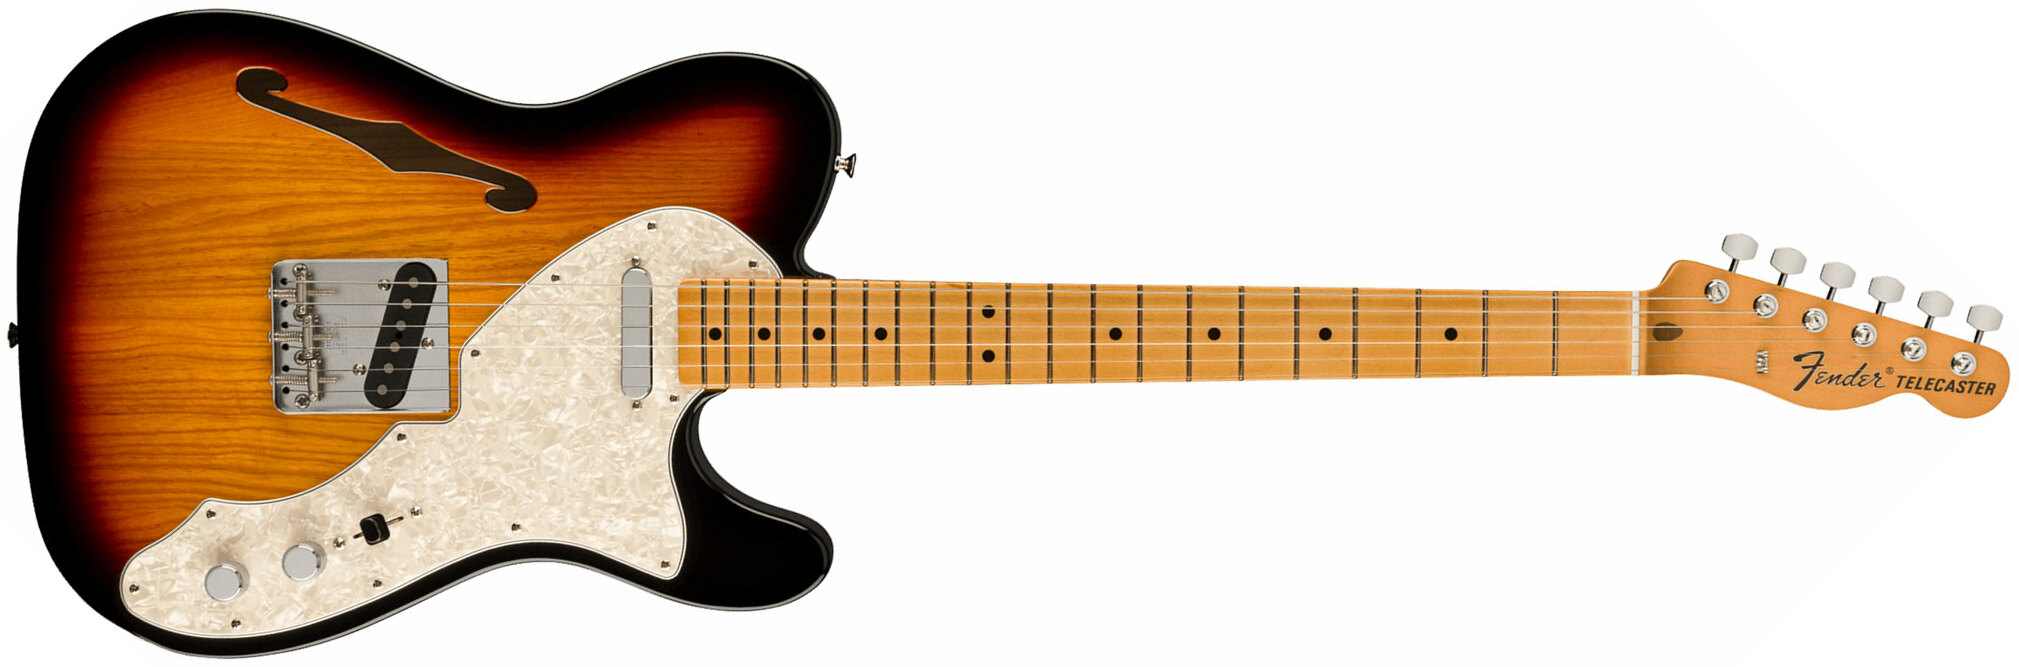 Fender Tele 60s Thinline Vintera 2 Mex 2s Ht Mn - 3-color Sunburst - Semi hollow elektriche gitaar - Main picture